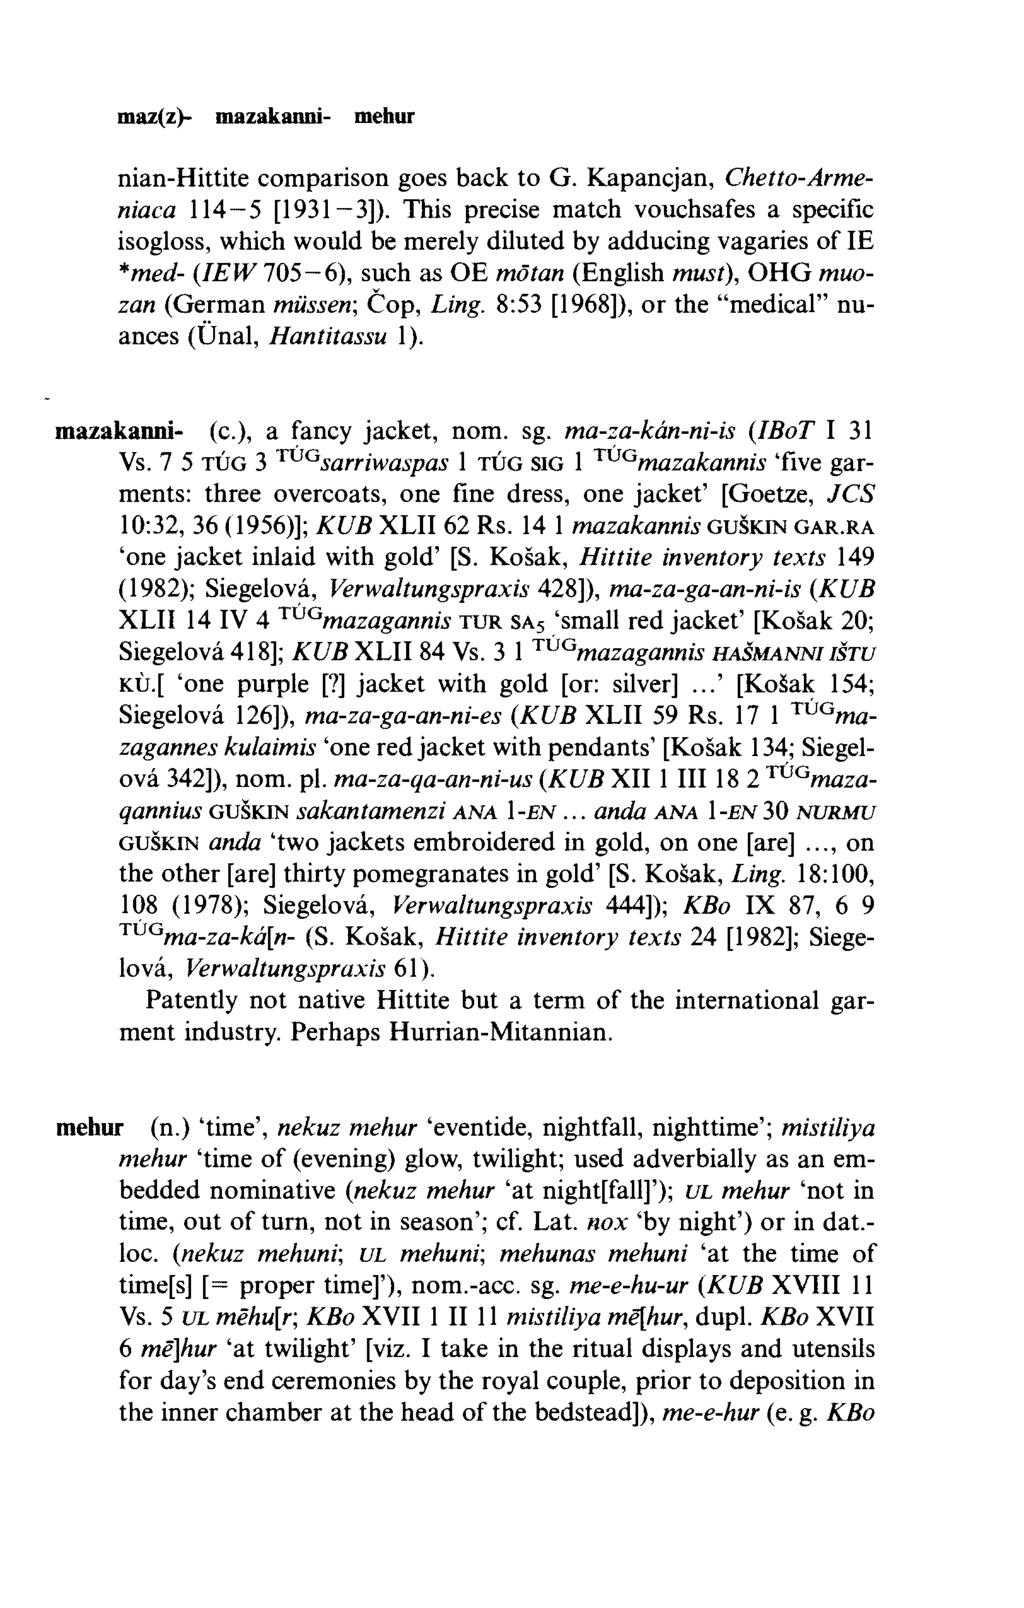 maz(z>- mazakanni- mehur nian-hittite comparison goes back to G. Kapancjan, Chetto-Armeniaca 114-5 [1931-3]).